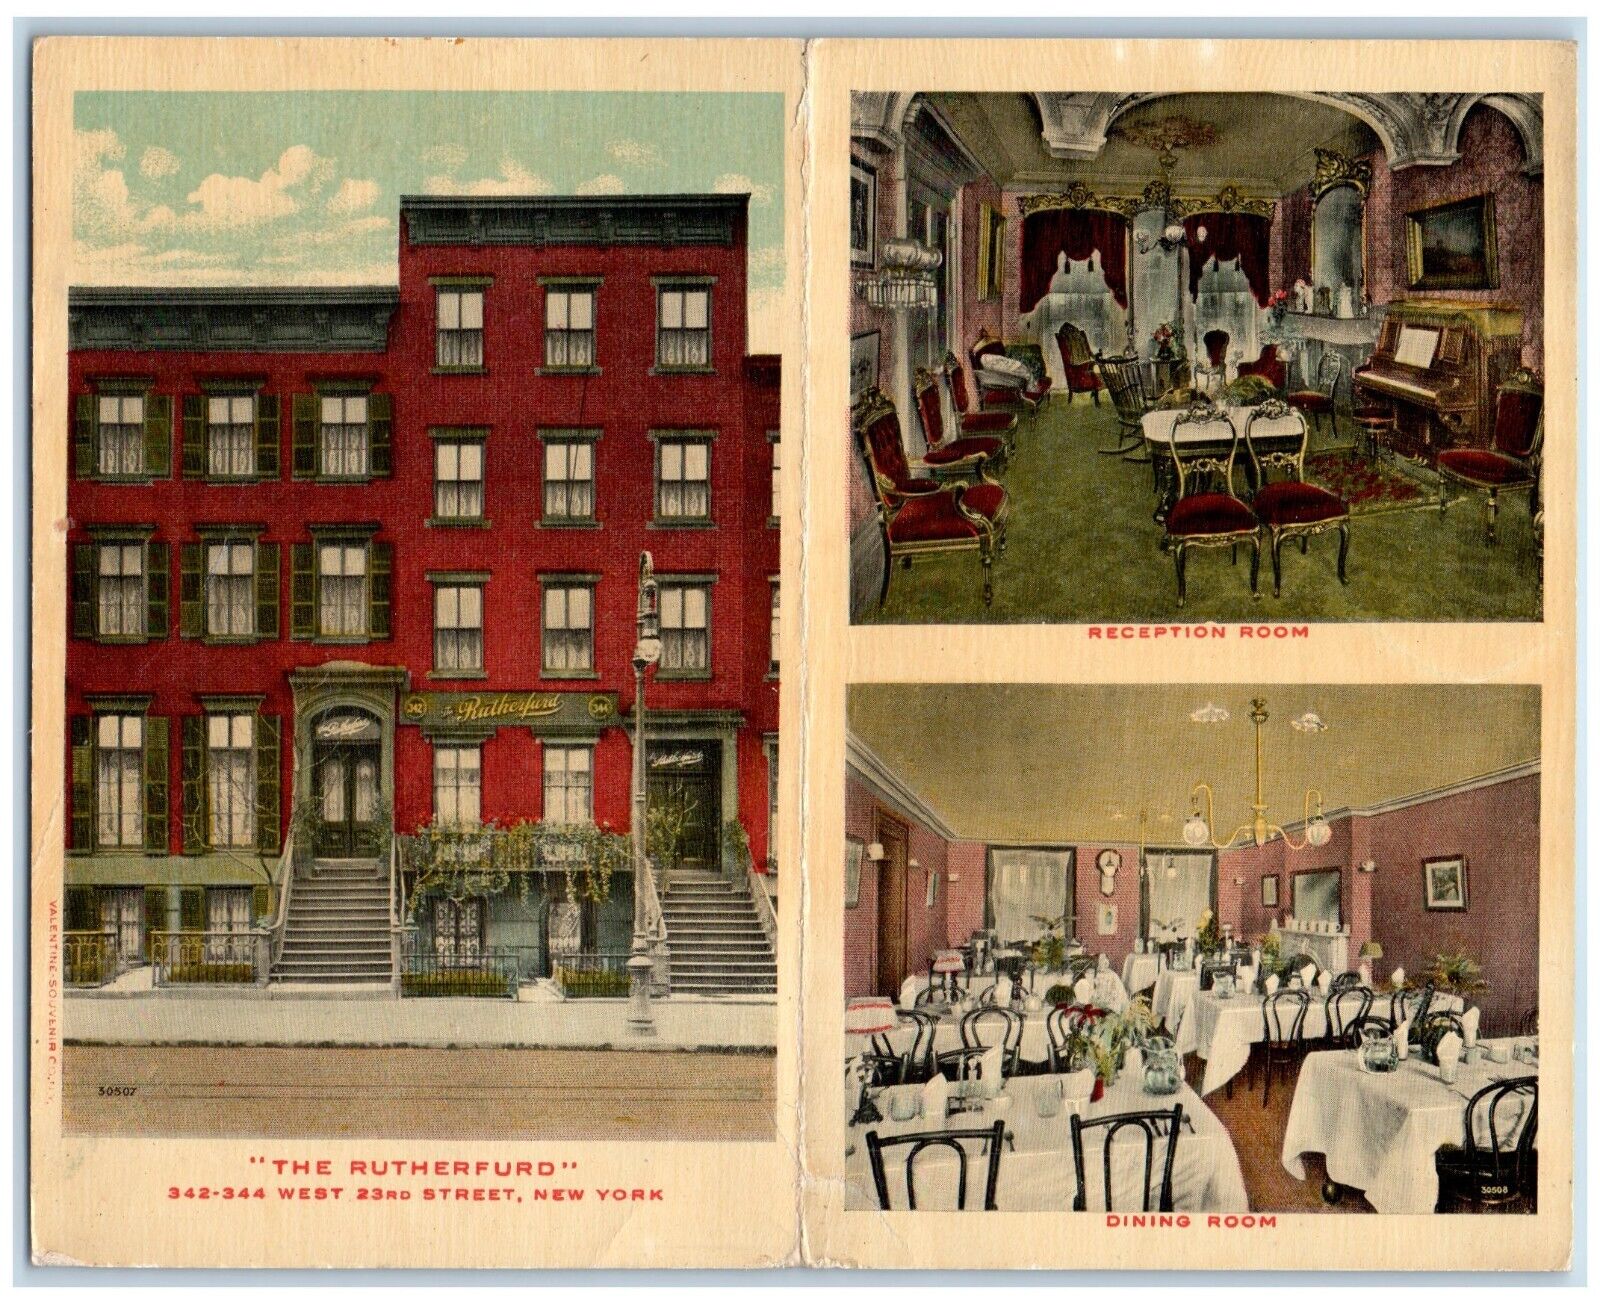 The Rutherfurd Reception Room Dining Room Restaurant Hotel NYC Vintage Postcard